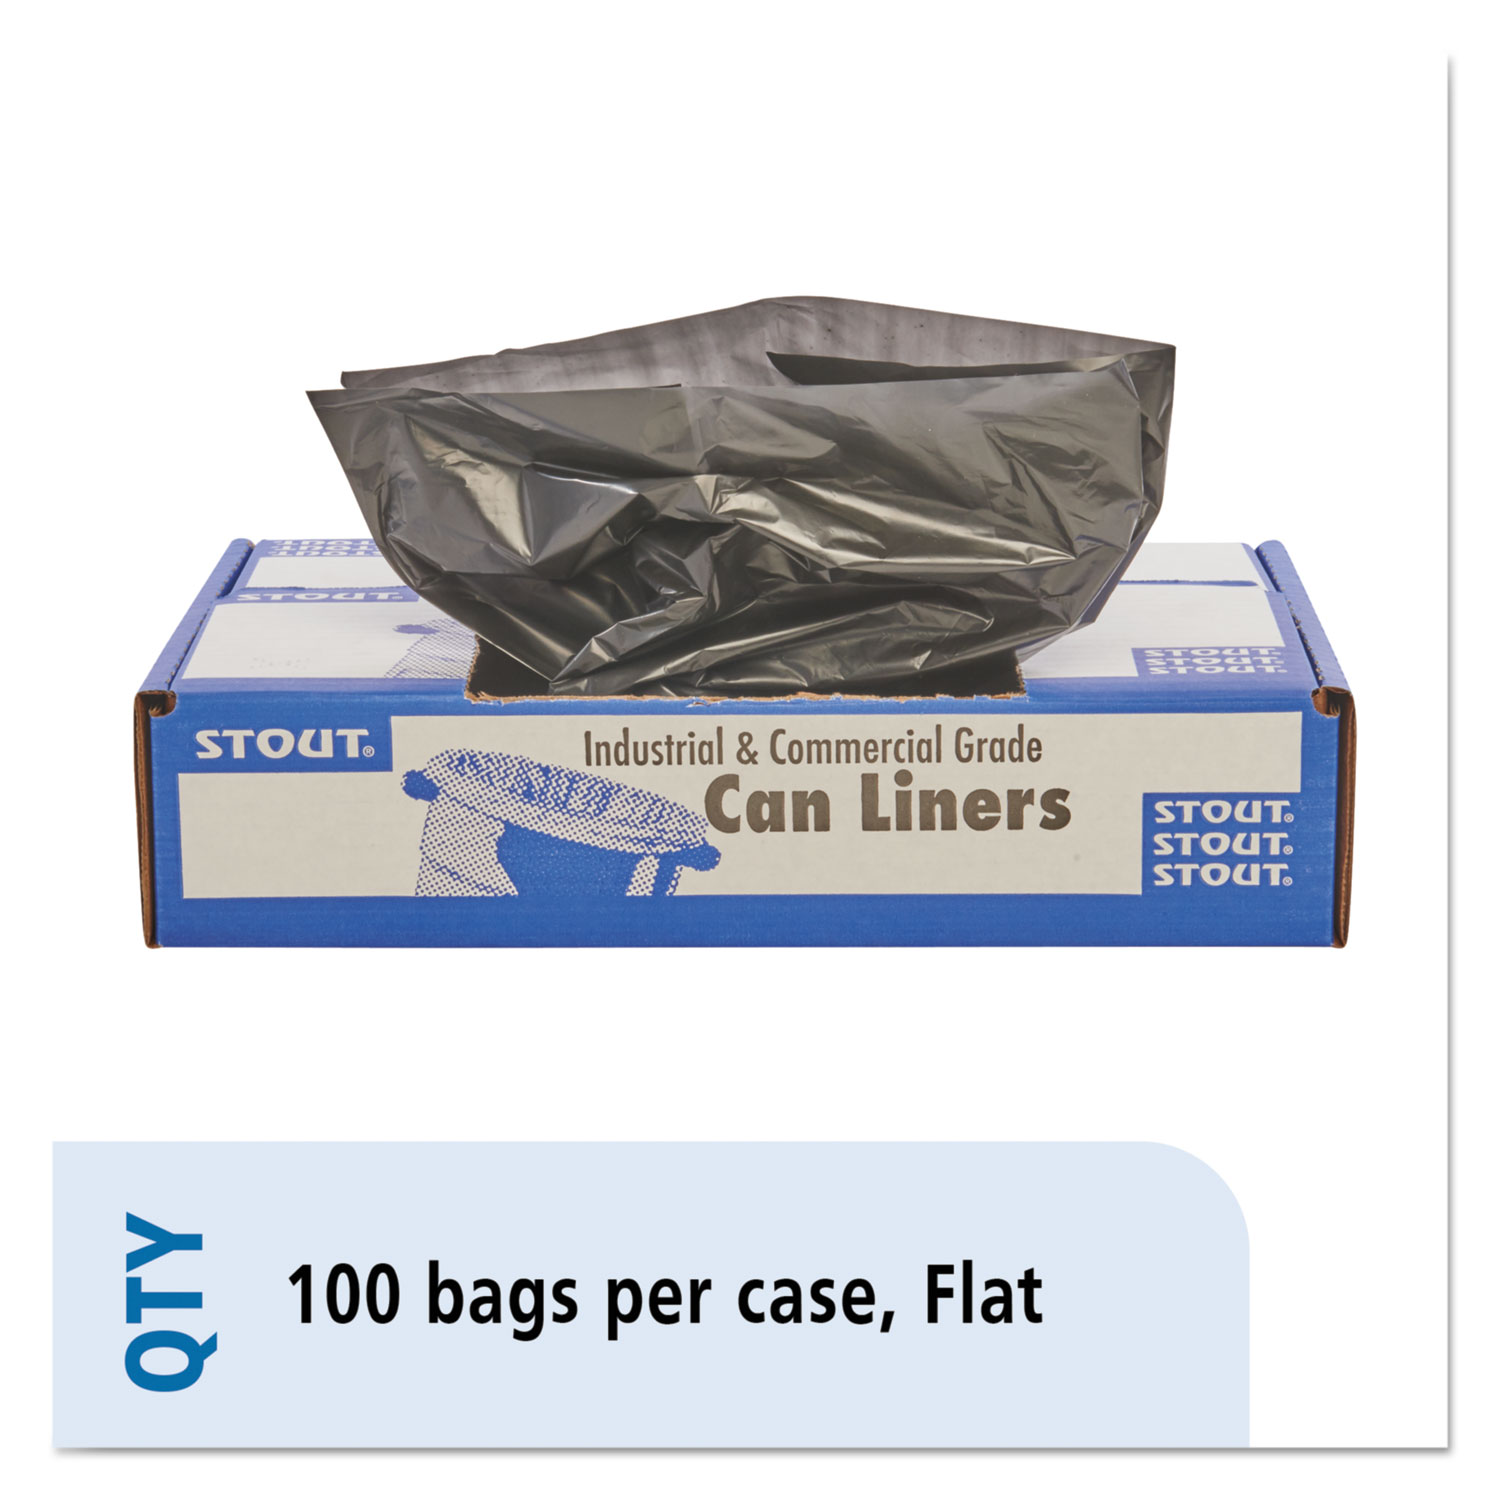 40-45 Gallon Trash Bags, 1.5Mil, Black Heavy Duty Garbage Can